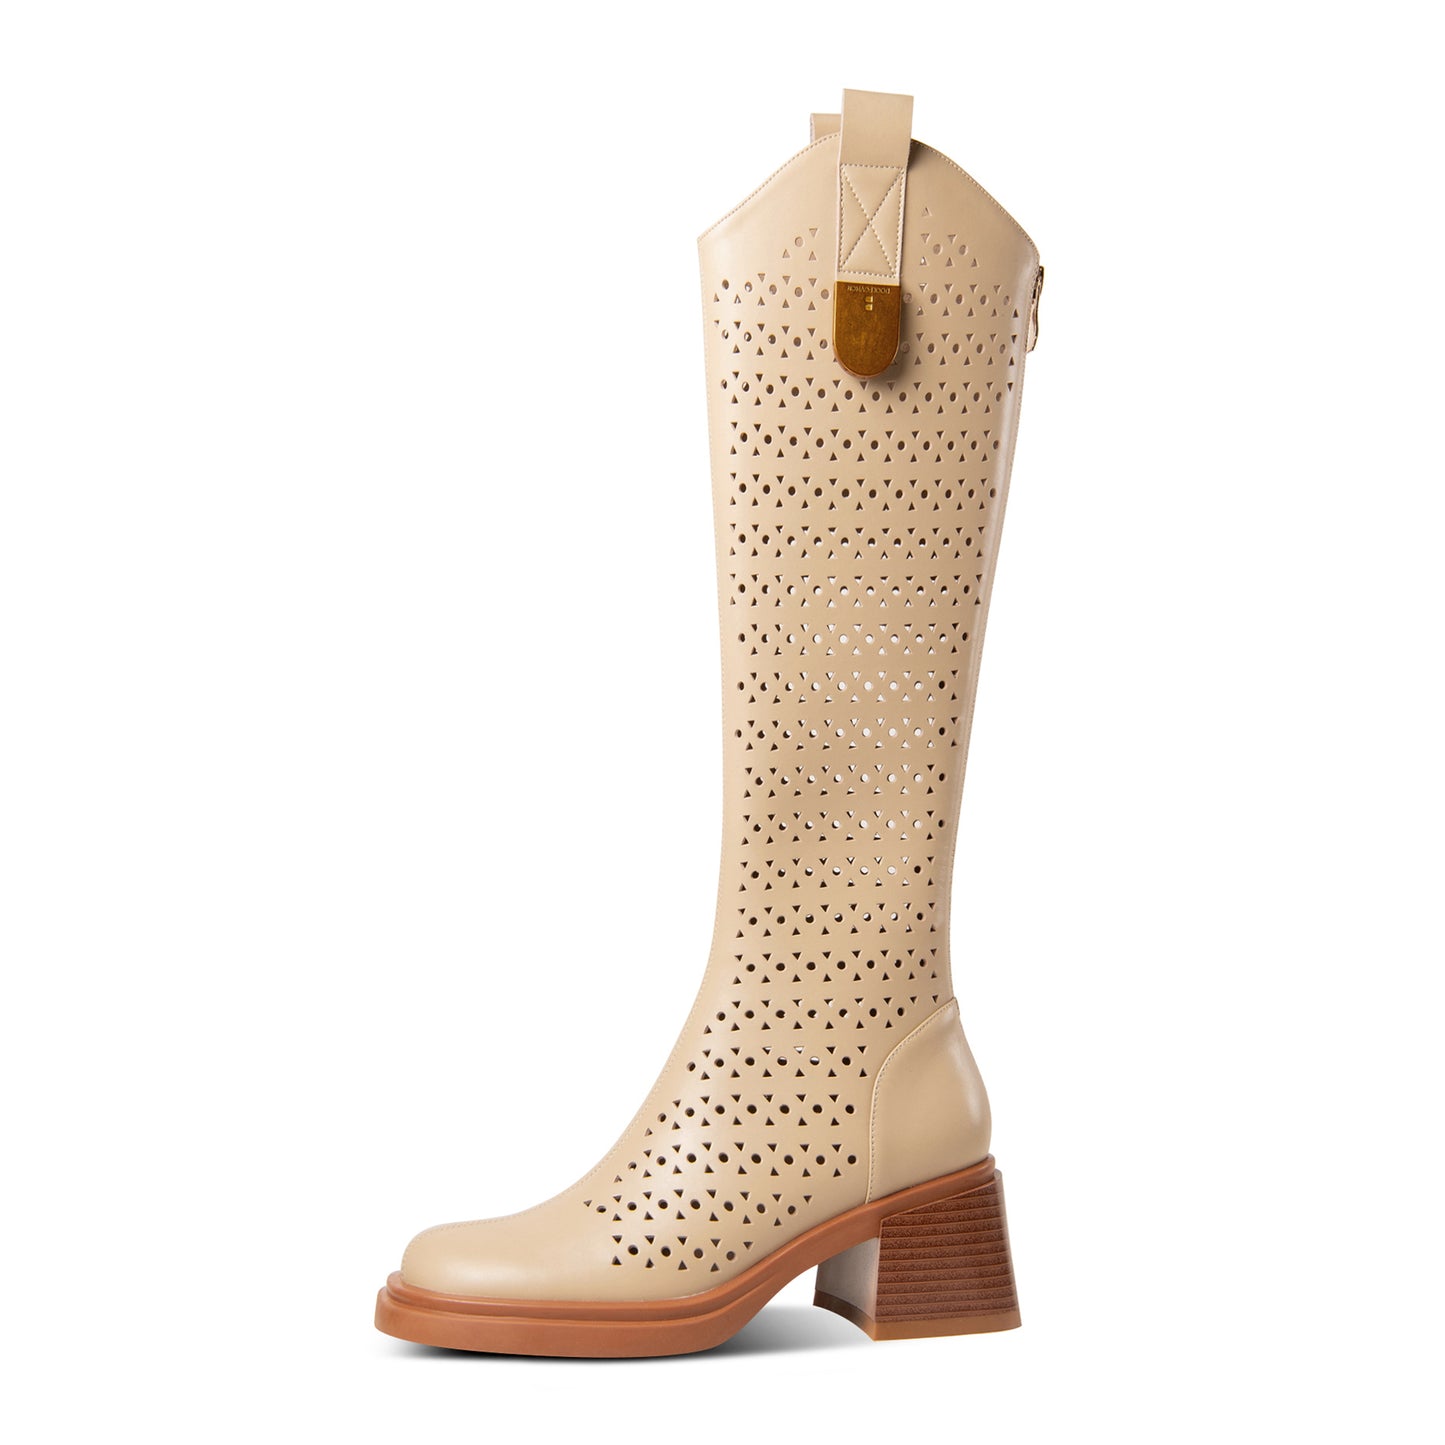 TinaCus Women's Handmade Genuine Leather Back Zip Up Block Heel Western Style Summer Knee High Boots